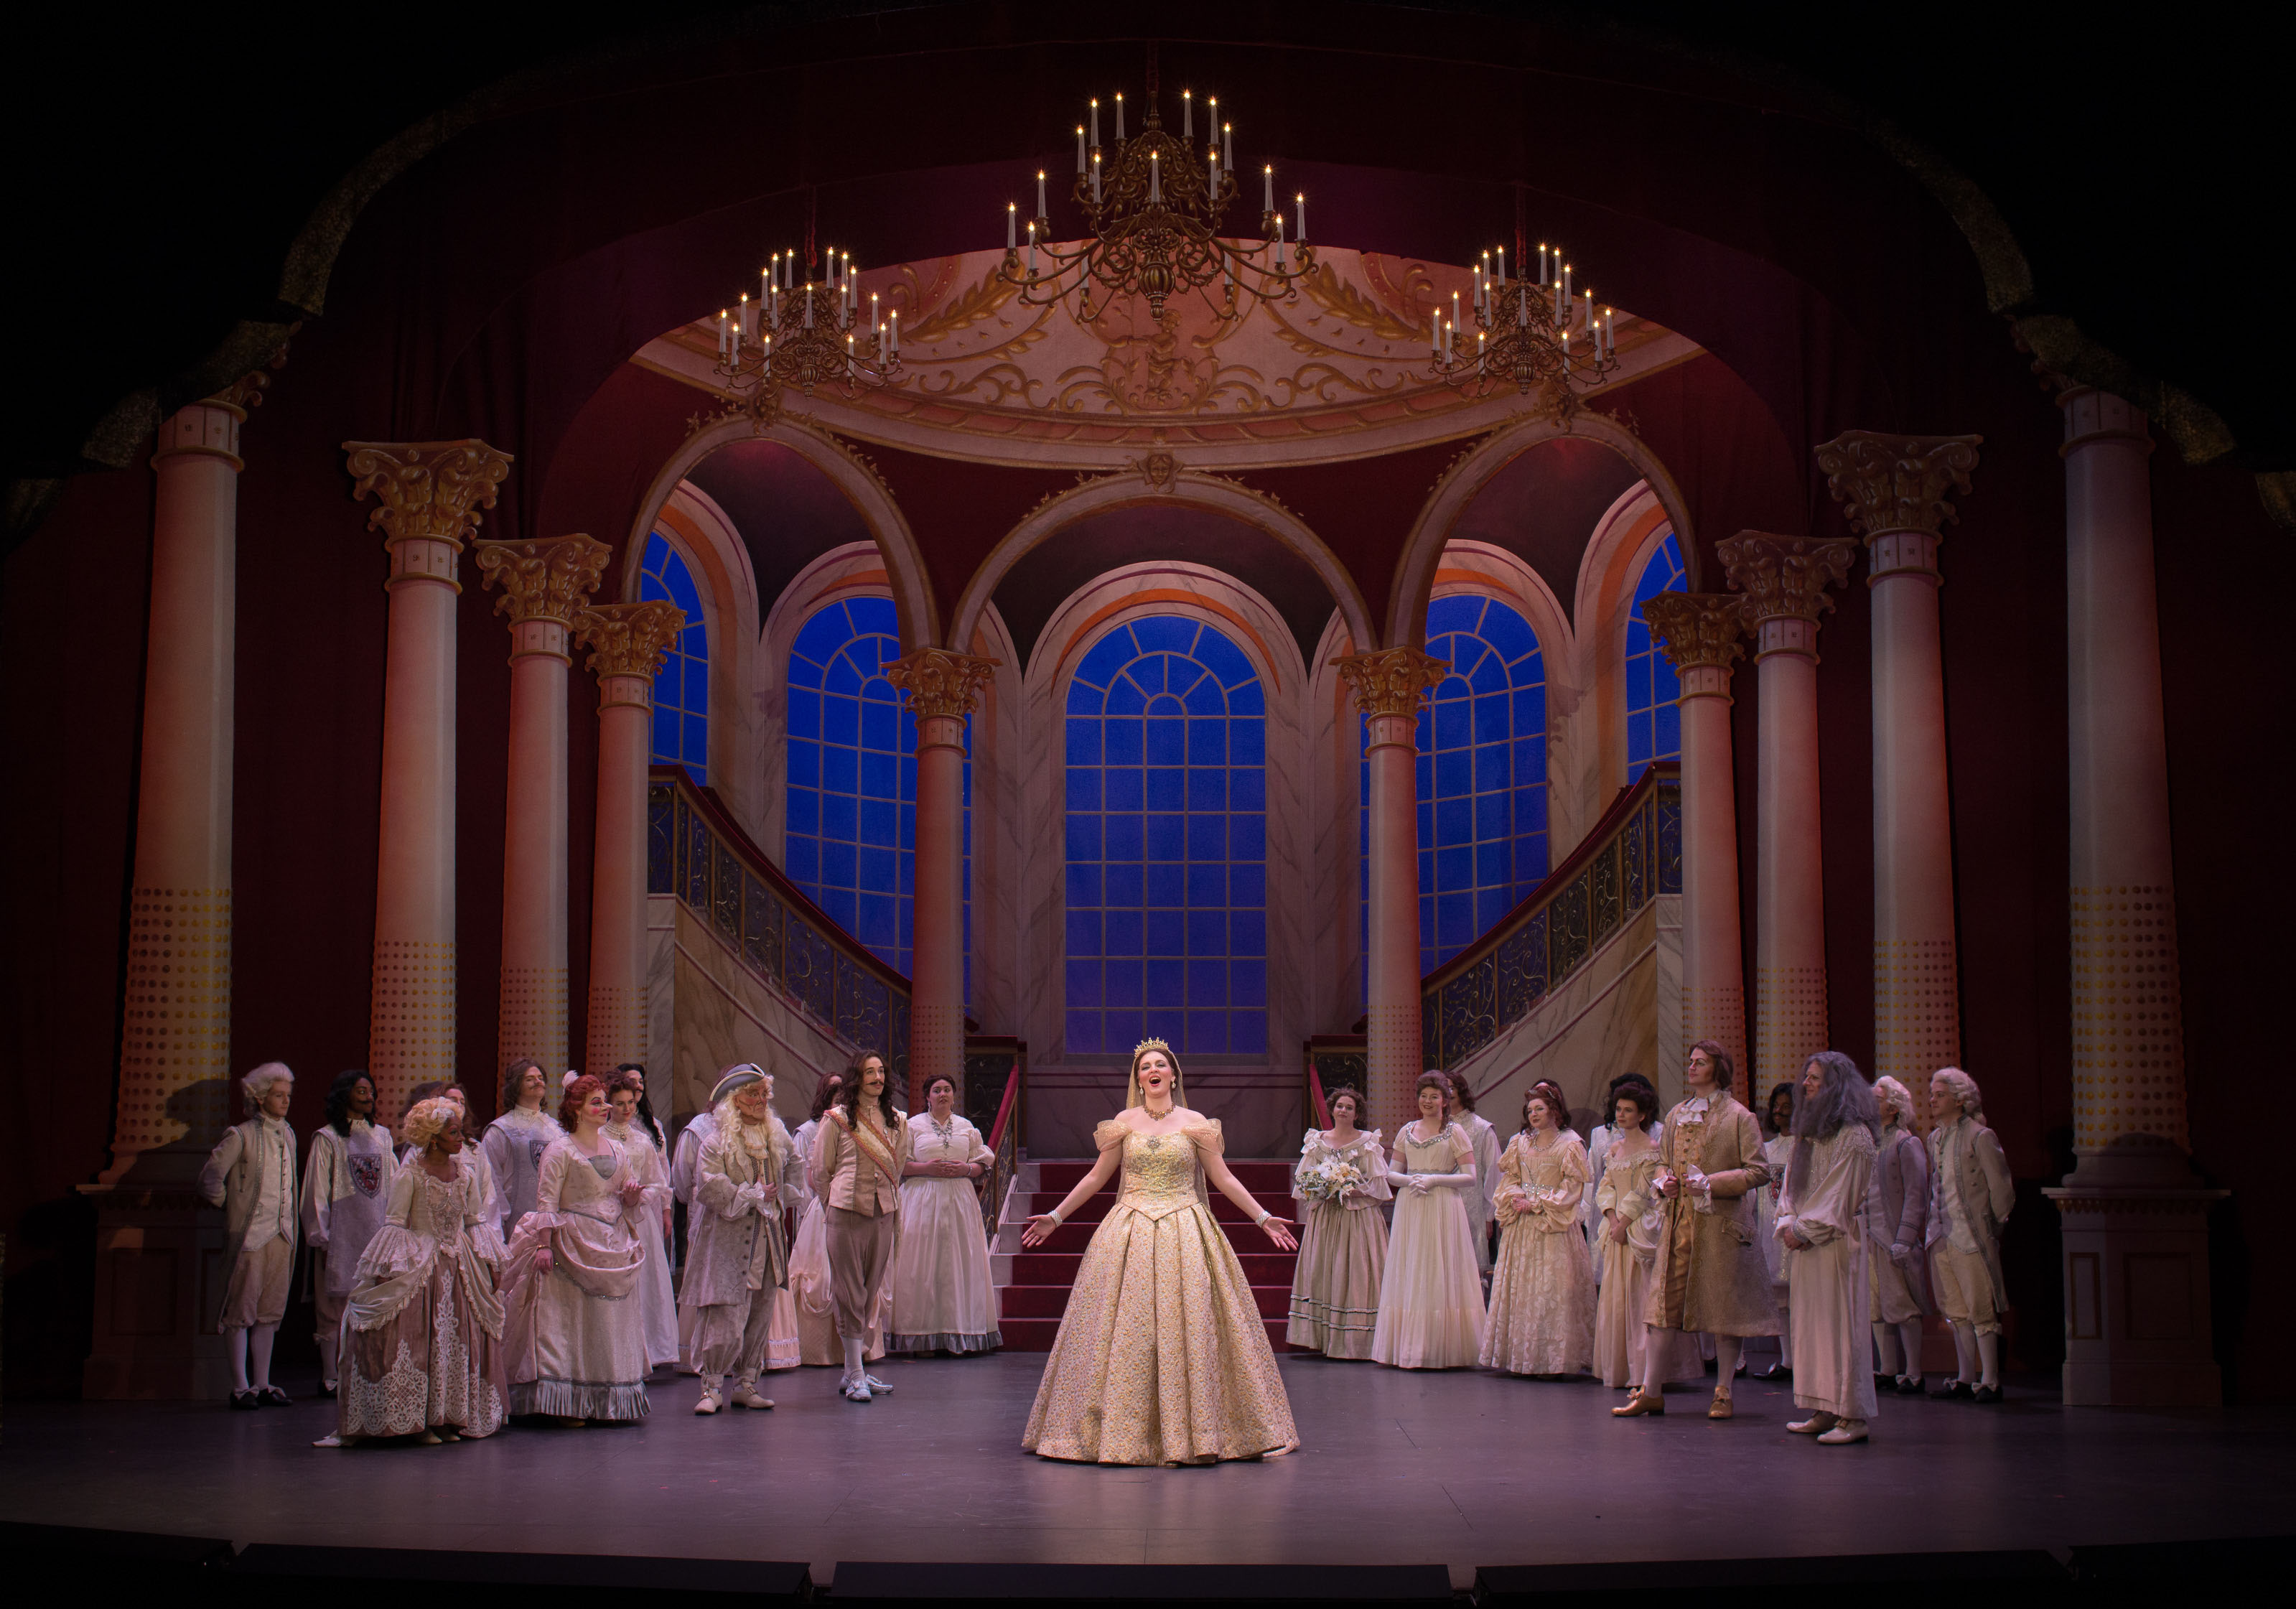 Kathleen Felty as Cinderella in the AJ Fletcher Opera Institute's "La Cenerentola" by Rossini, 2018